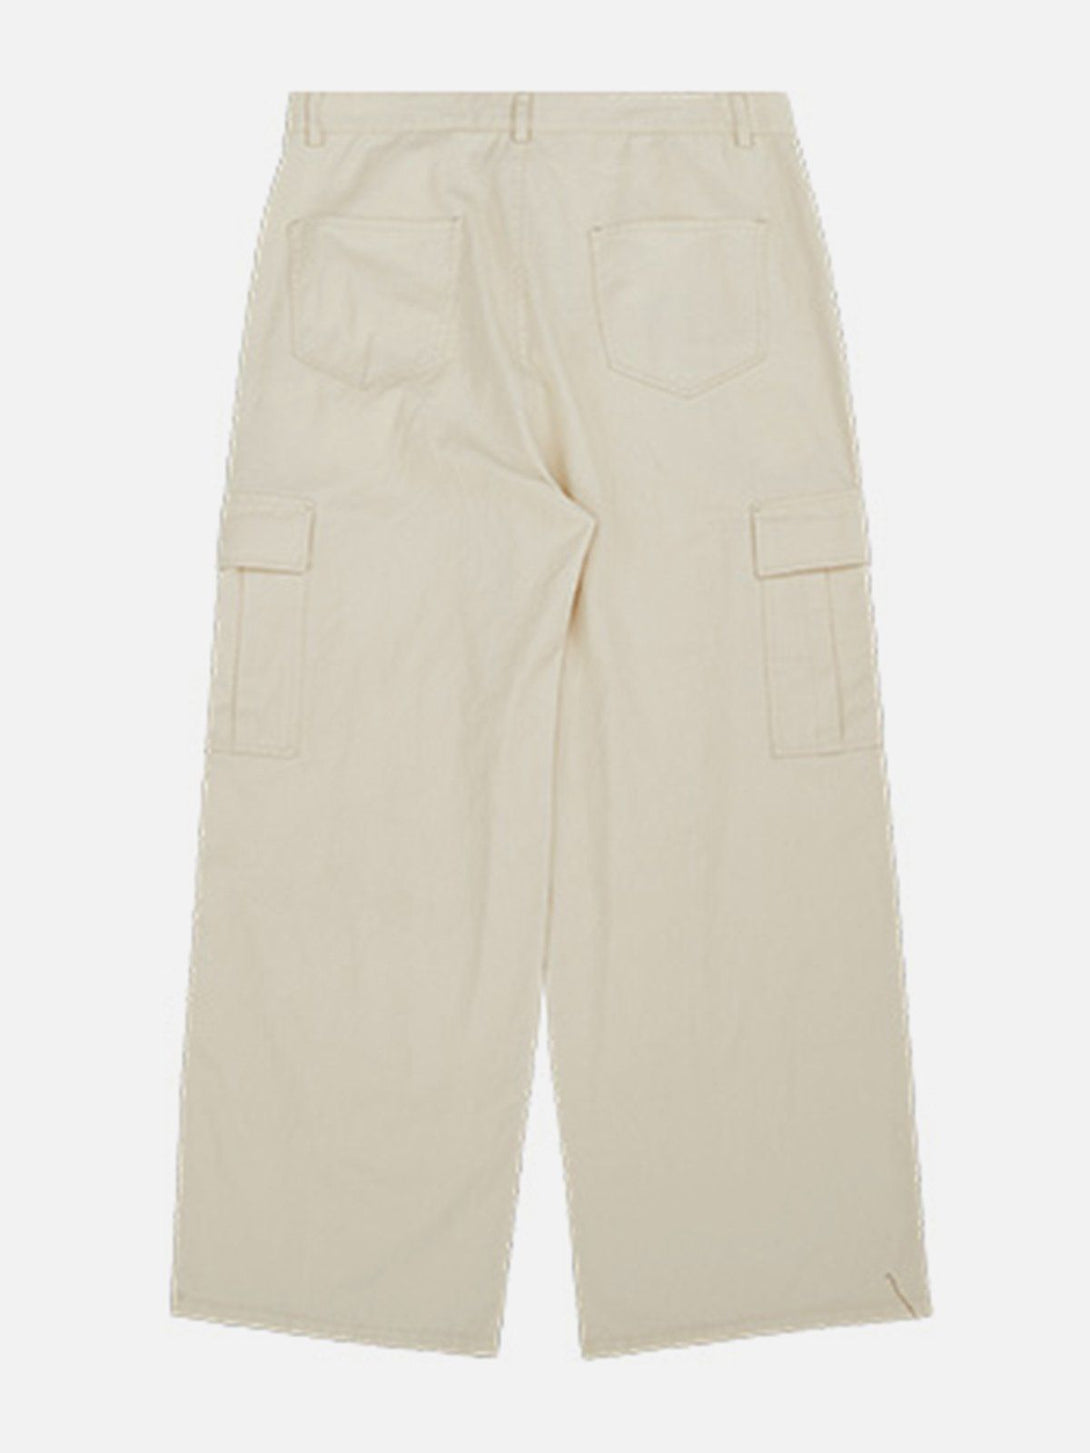 Majesda® - Multi-Pocket Wide Leg Cargo Pants outfit ideas streetwear fashion